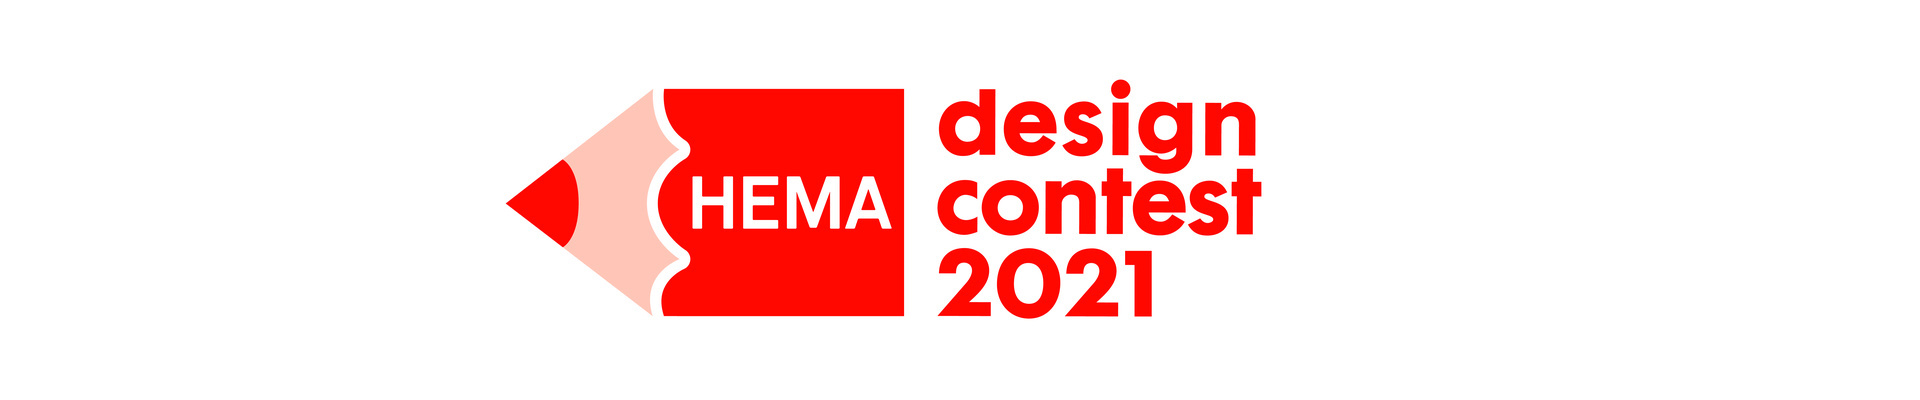 HEMA design contest 